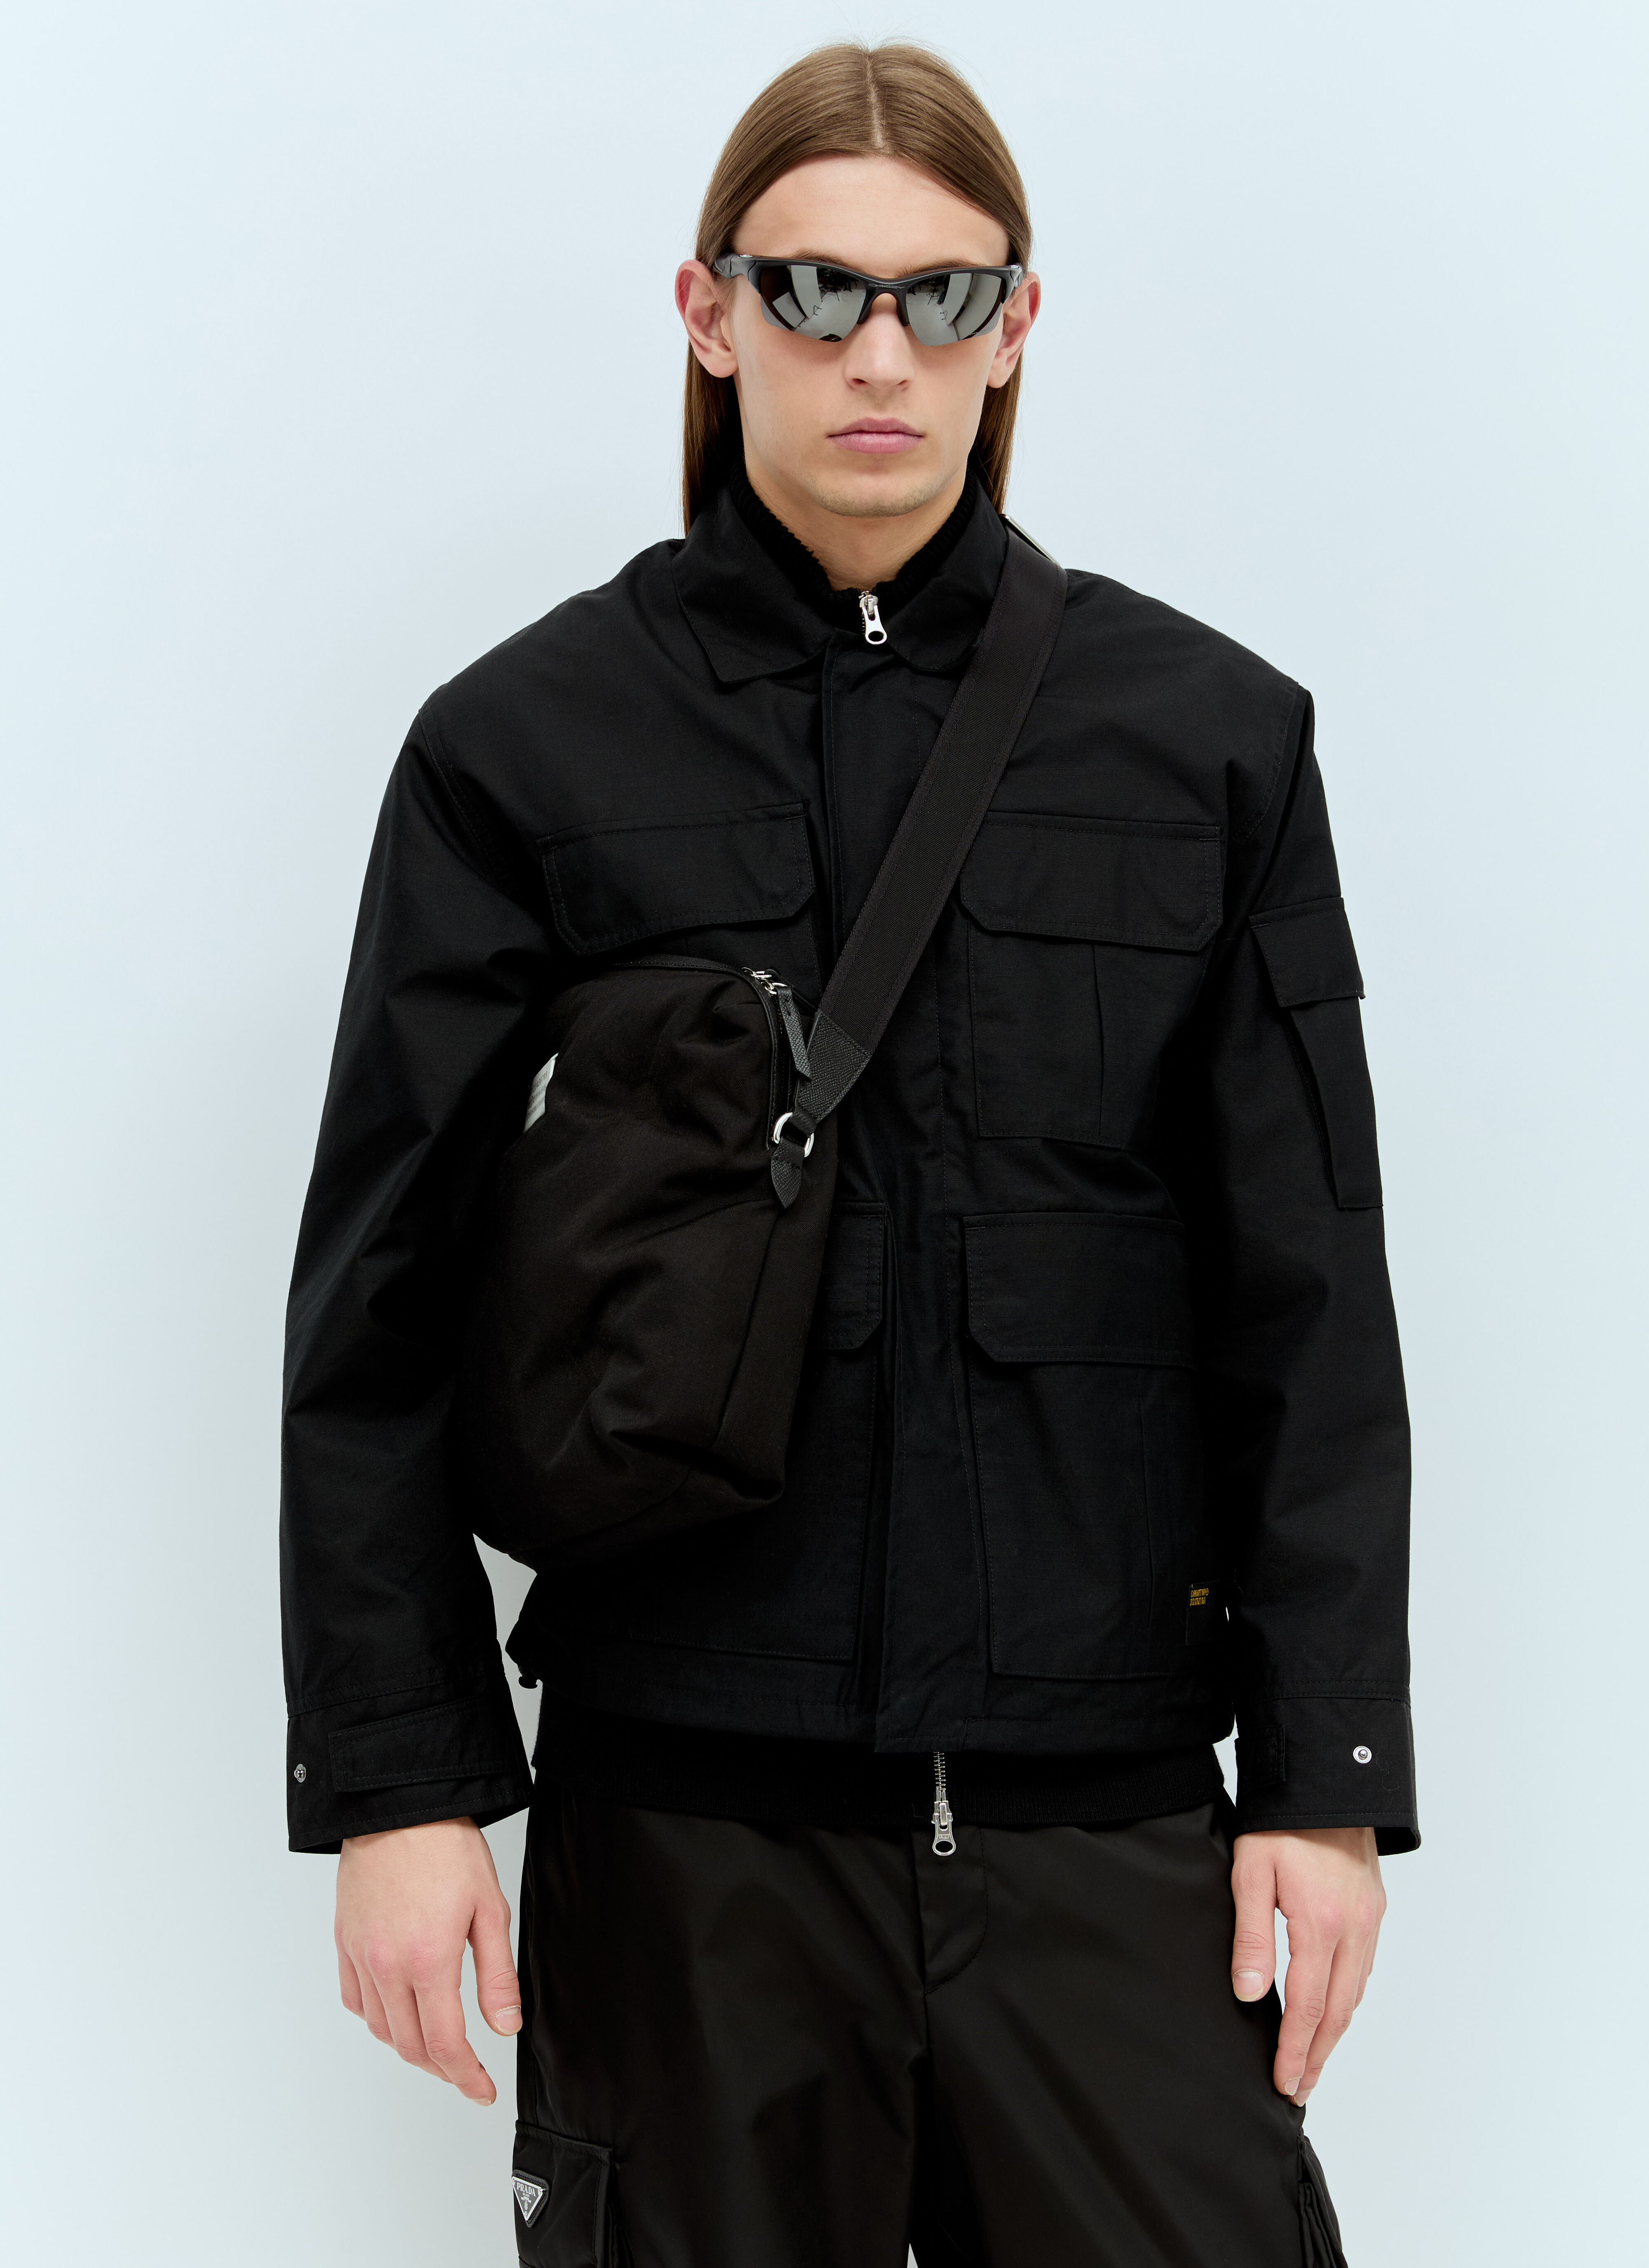 Junya Watanabe x Oakley Half Jacket 2.0 XL Sunglasses Black jwo0154001